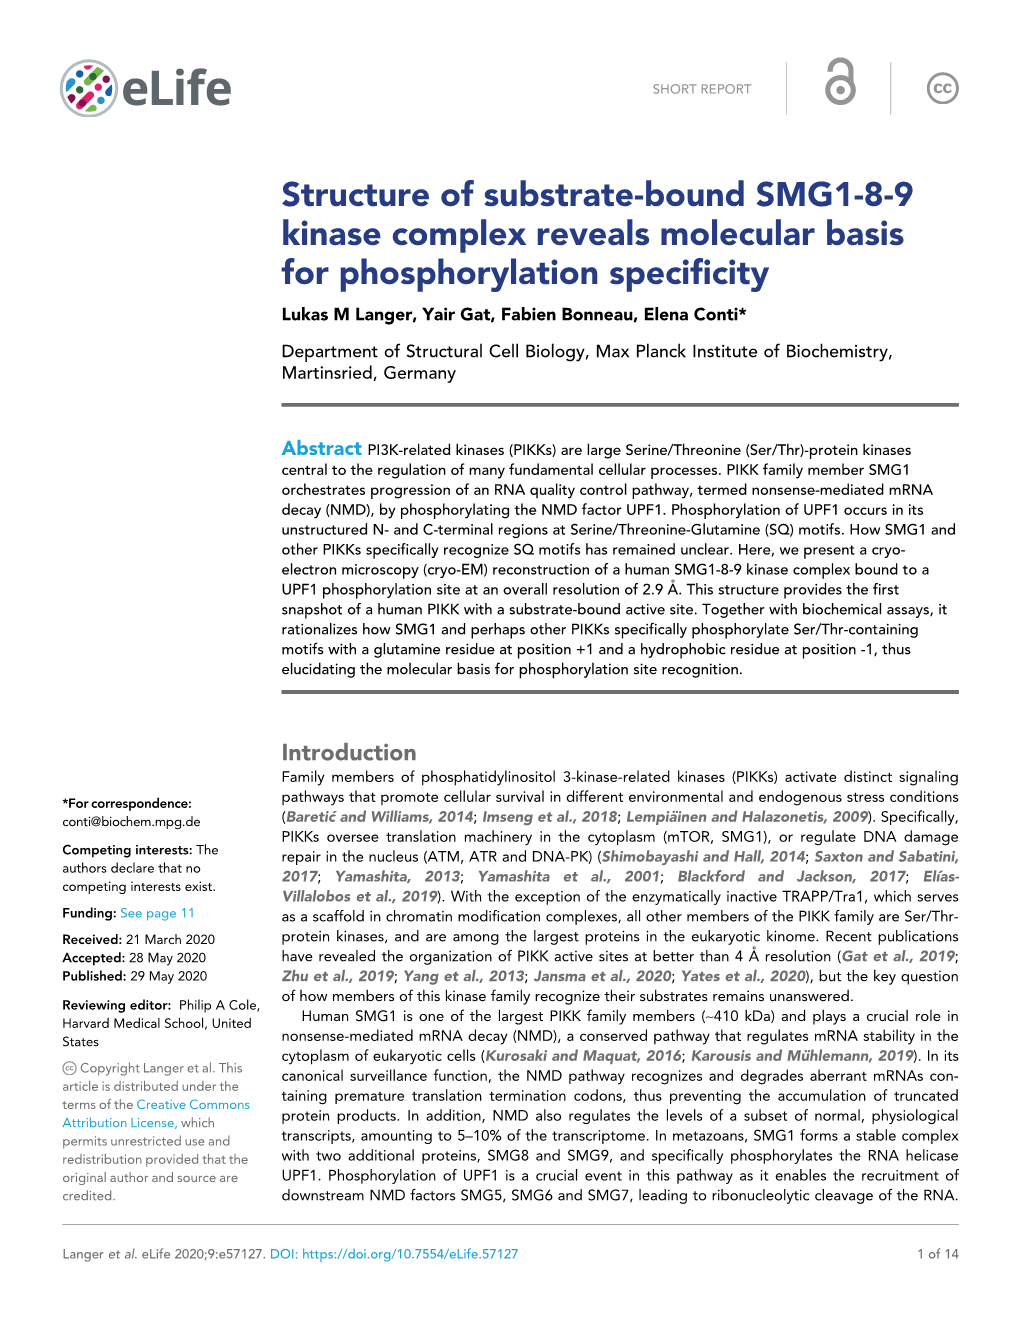 Structure of Substrate-Bound SMG1-8-9 Kinase Complex Reveals Molecular Basis for Phosphorylation Specificity Lukas M Langer, Yair Gat, Fabien Bonneau, Elena Conti*